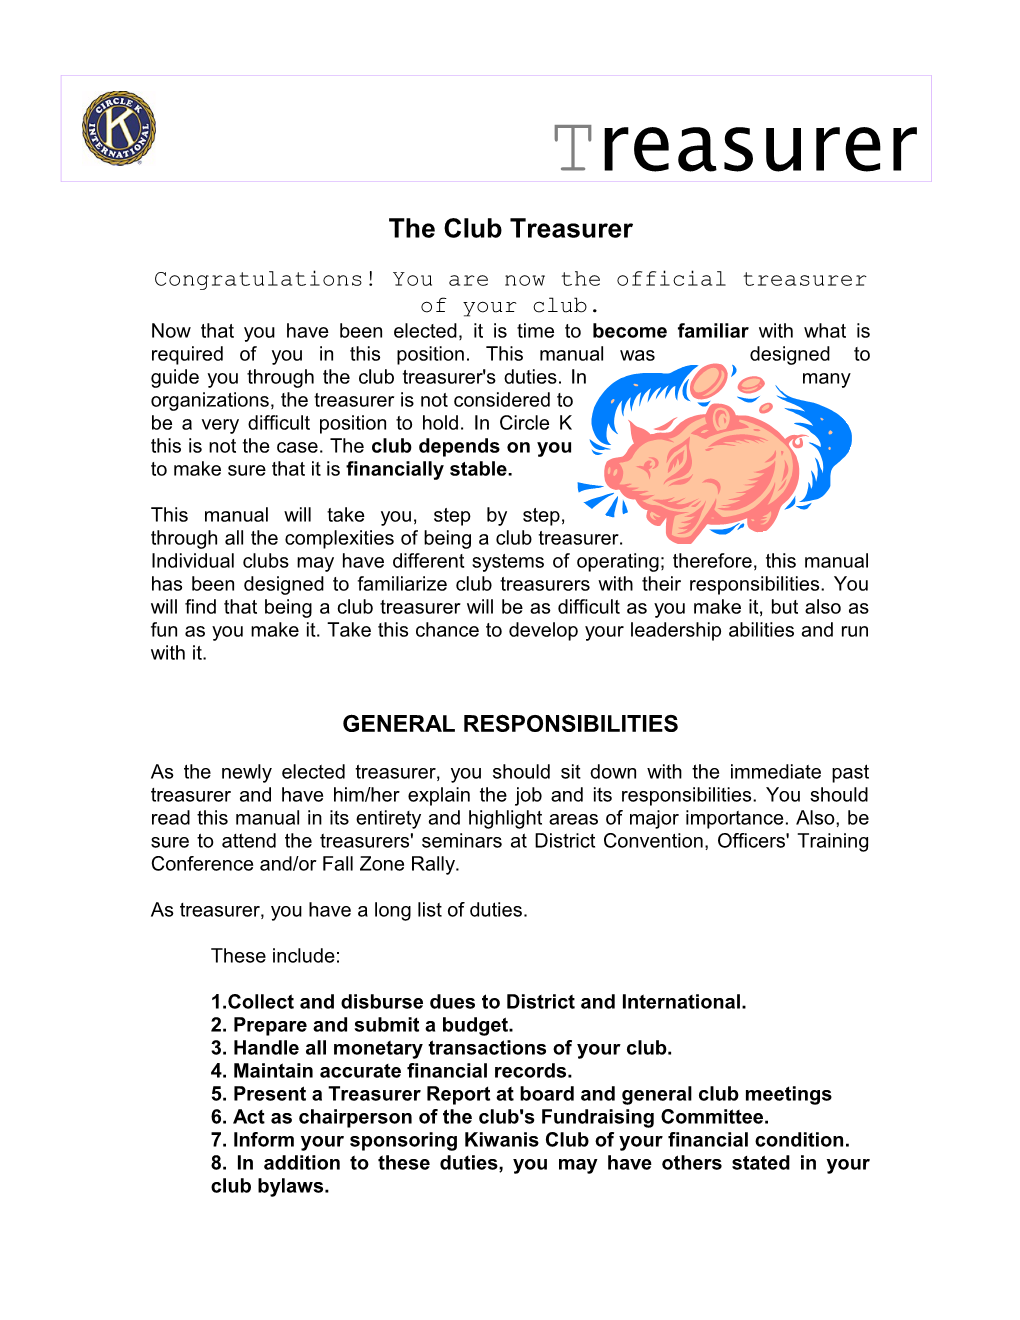 The Club Treasurer